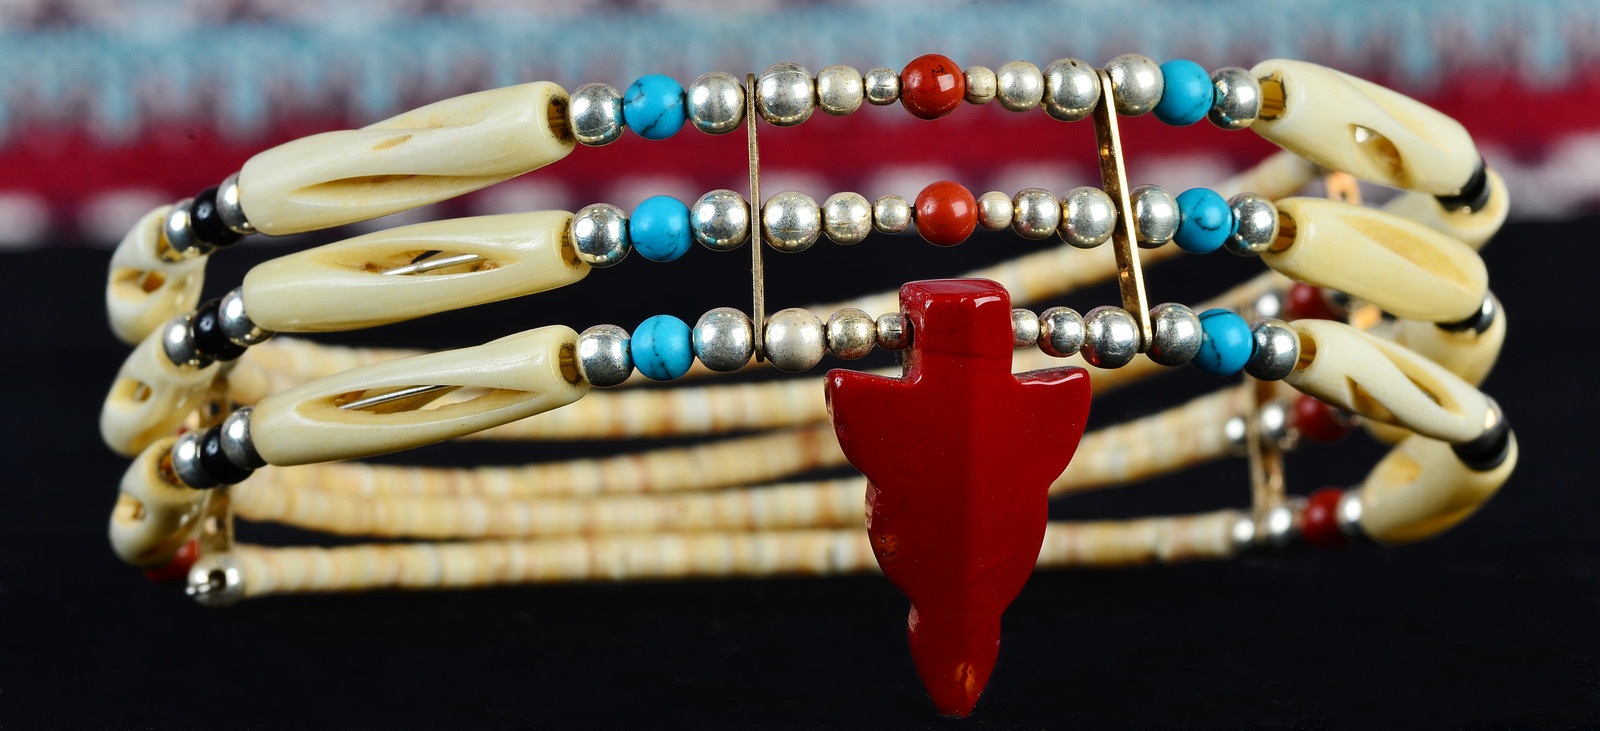 native american bracelets meaning - seplm.ru.